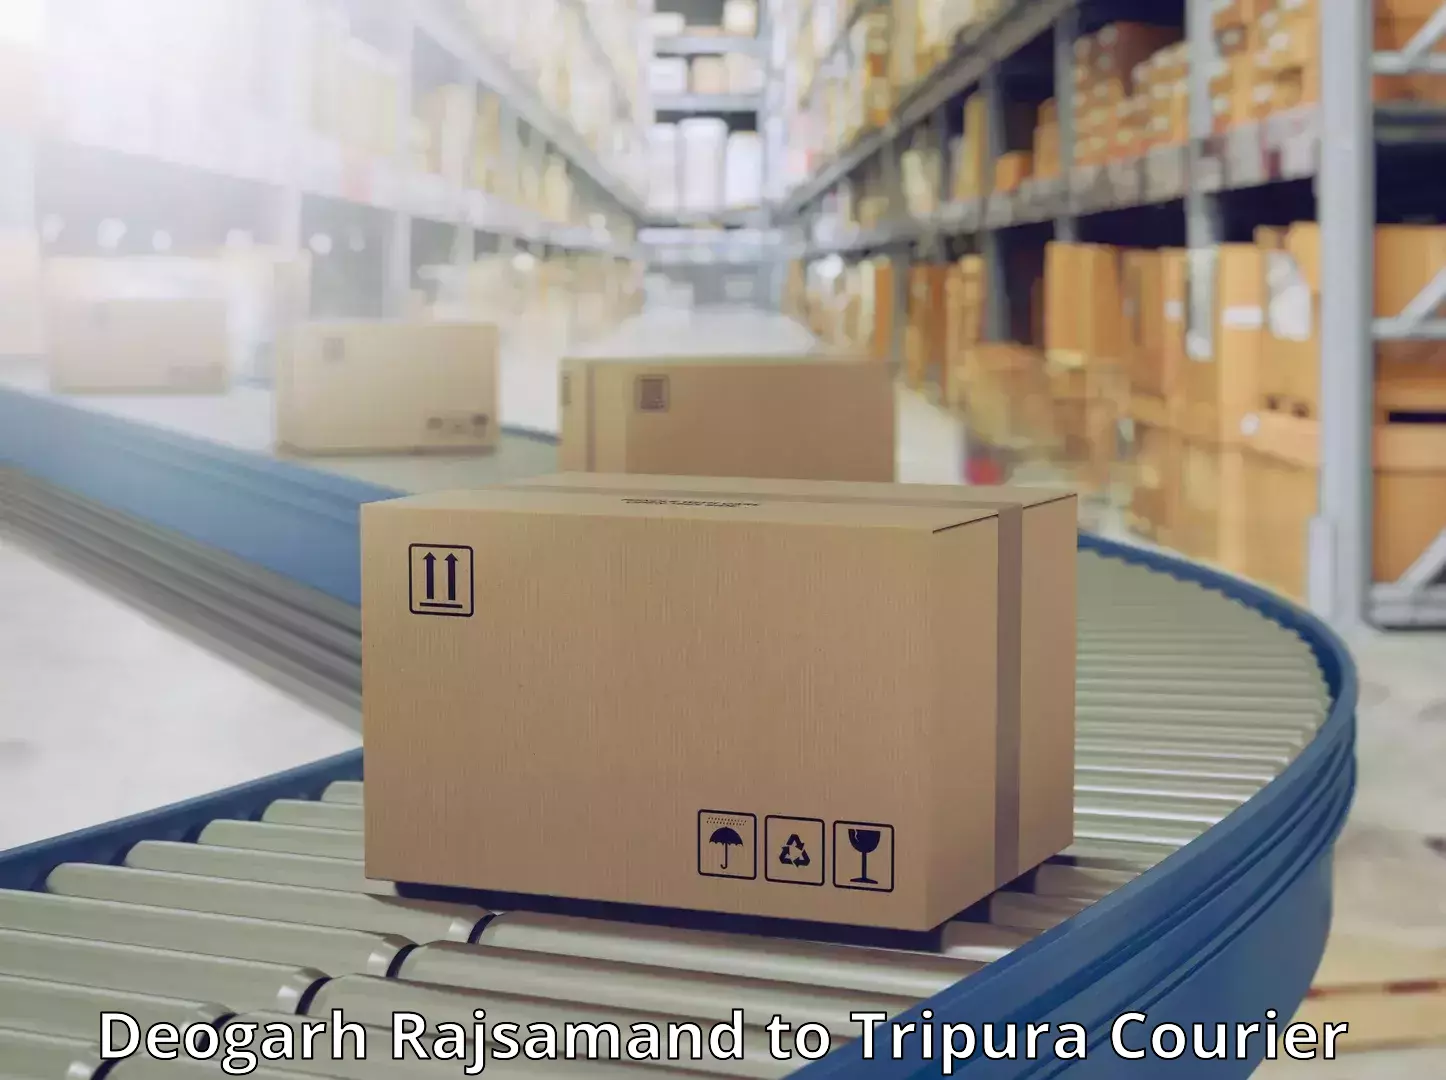 Reliable logistics providers Deogarh Rajsamand to Udaipur Tripura